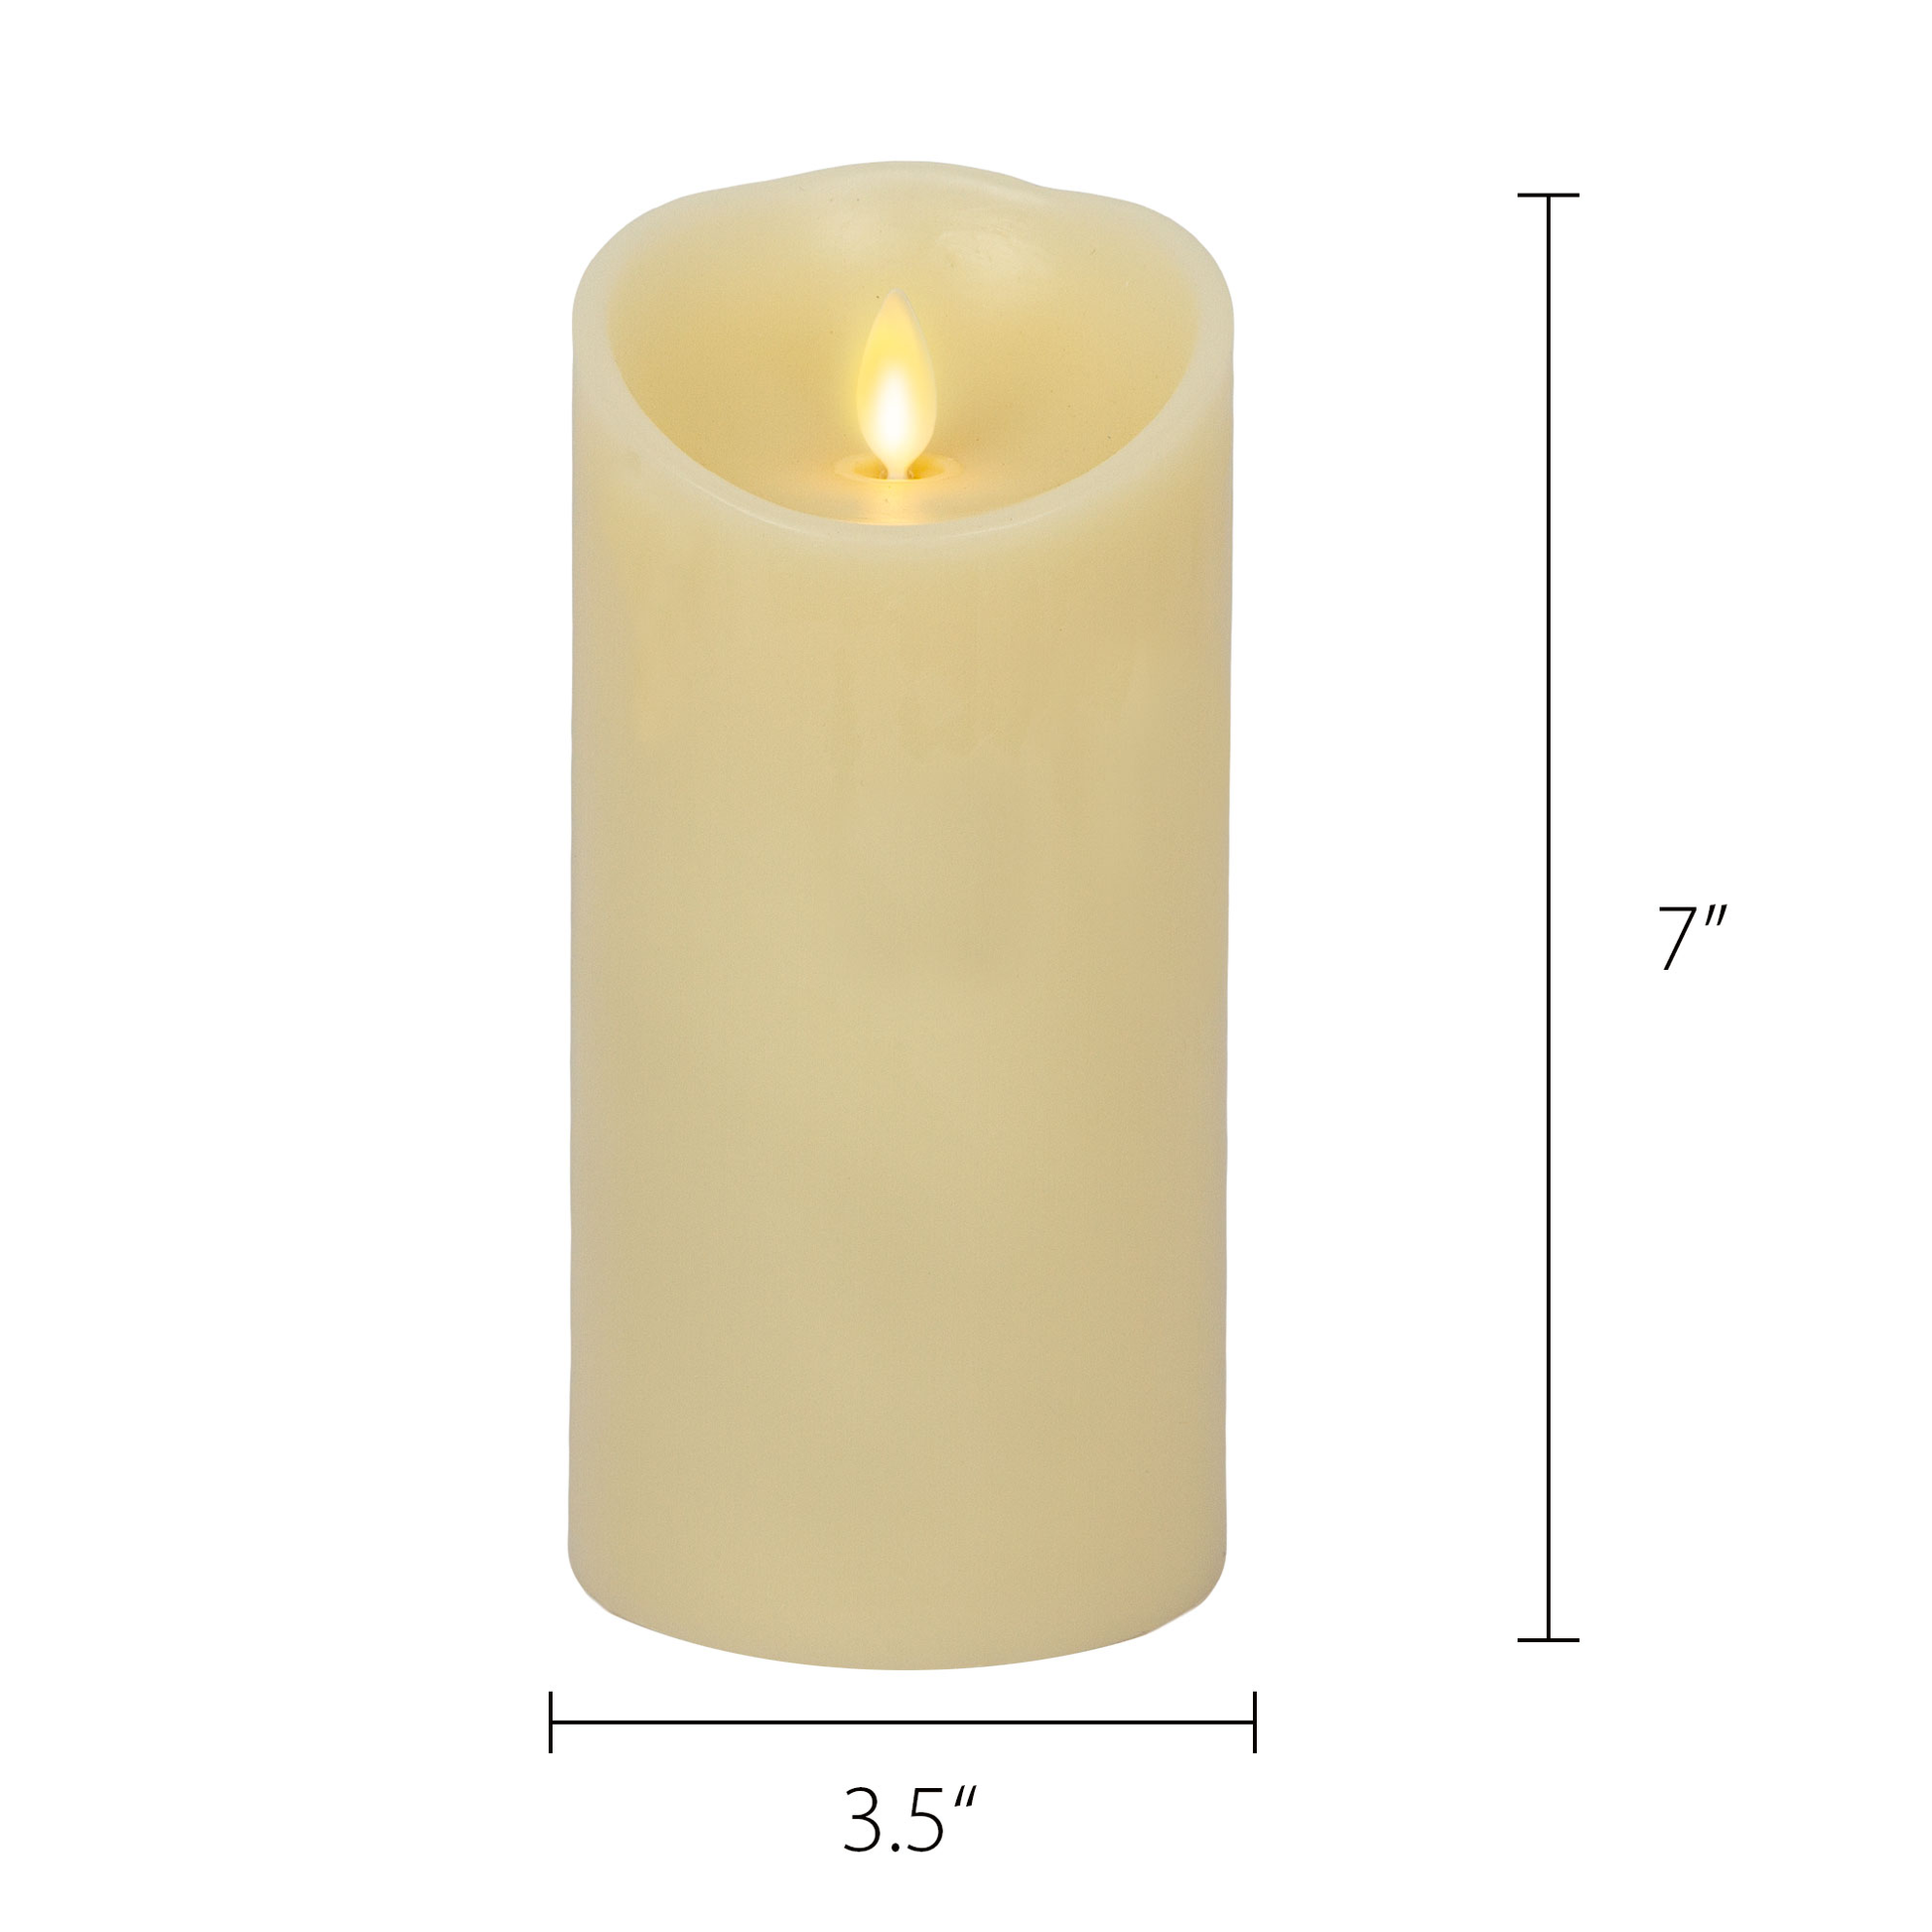 an image of Luminara's vanilla scented flameless candles